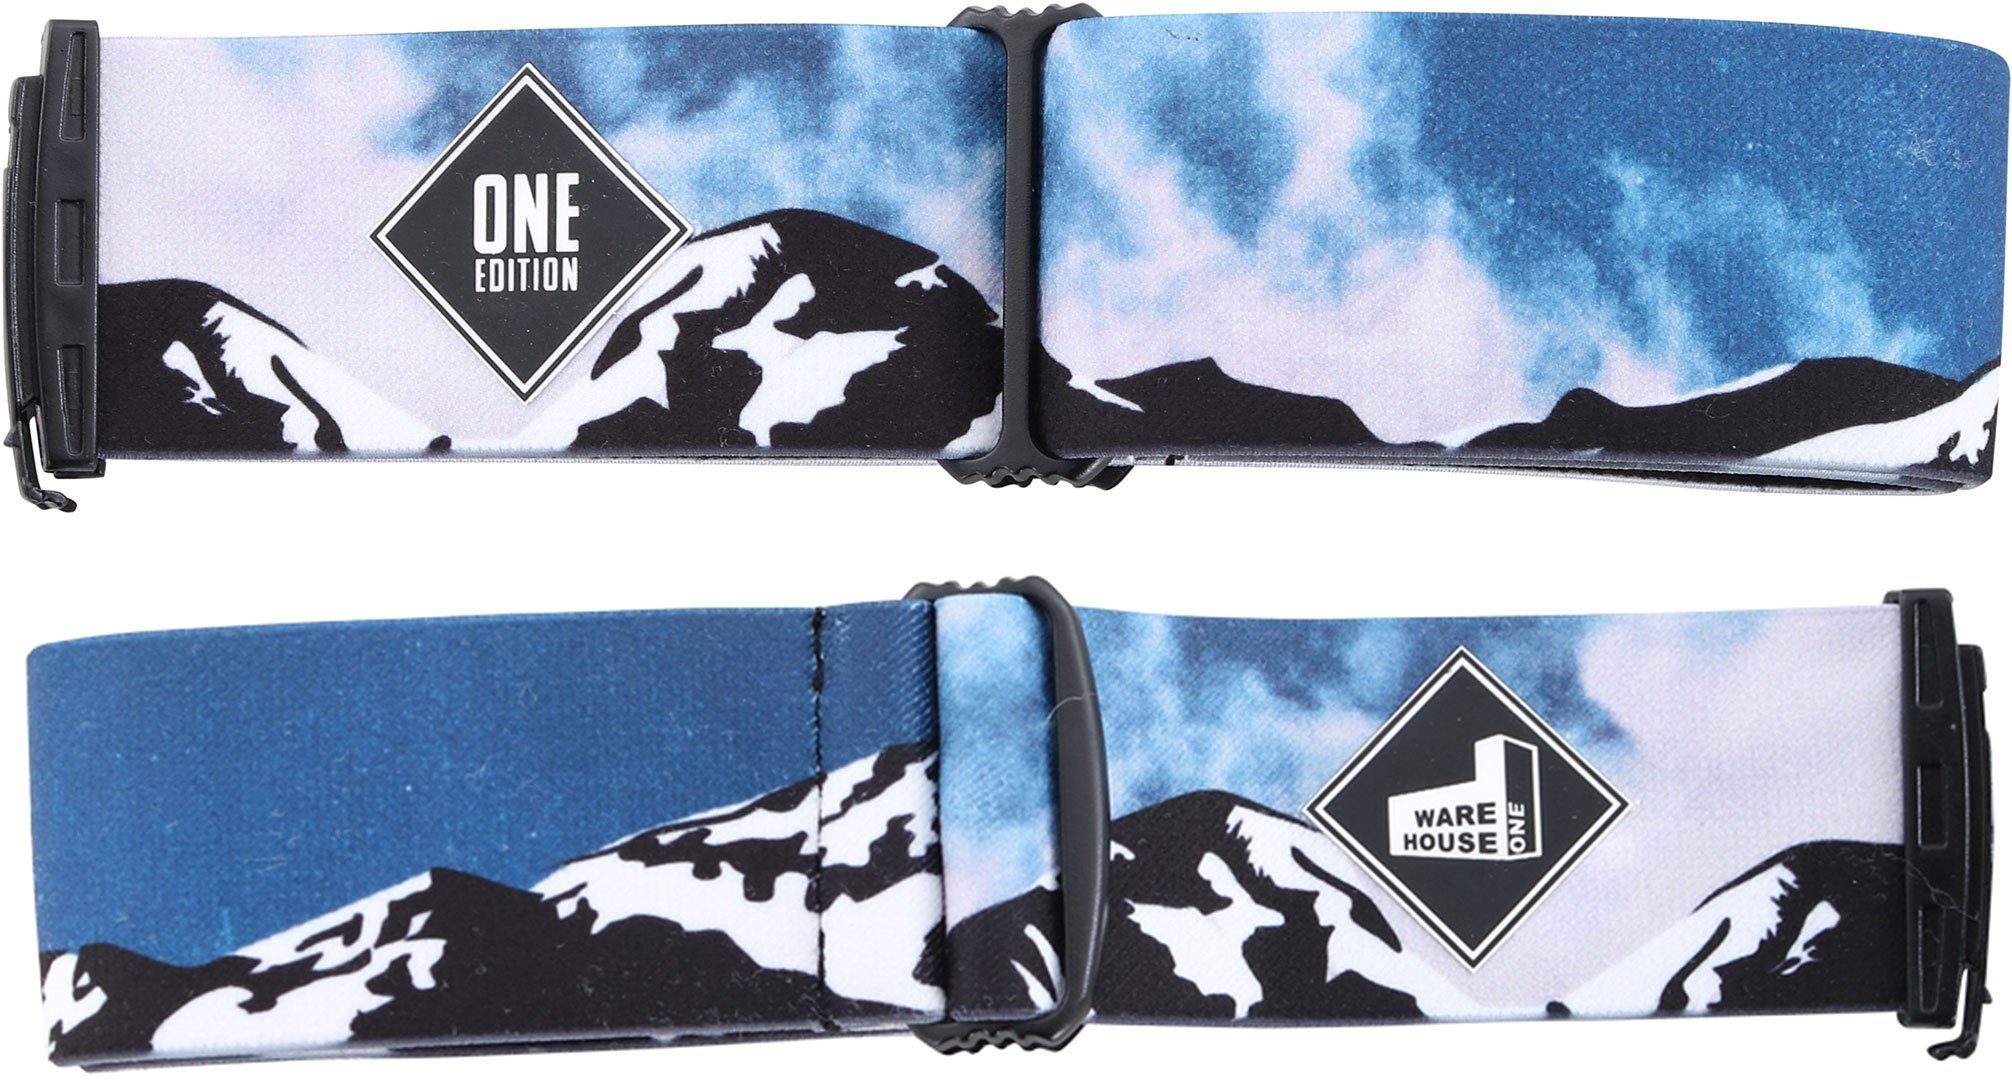 Aphex Snowboardbrille APHEX Magnet Schneebrille mountain + THE Glas STYX ONE strap EDITION